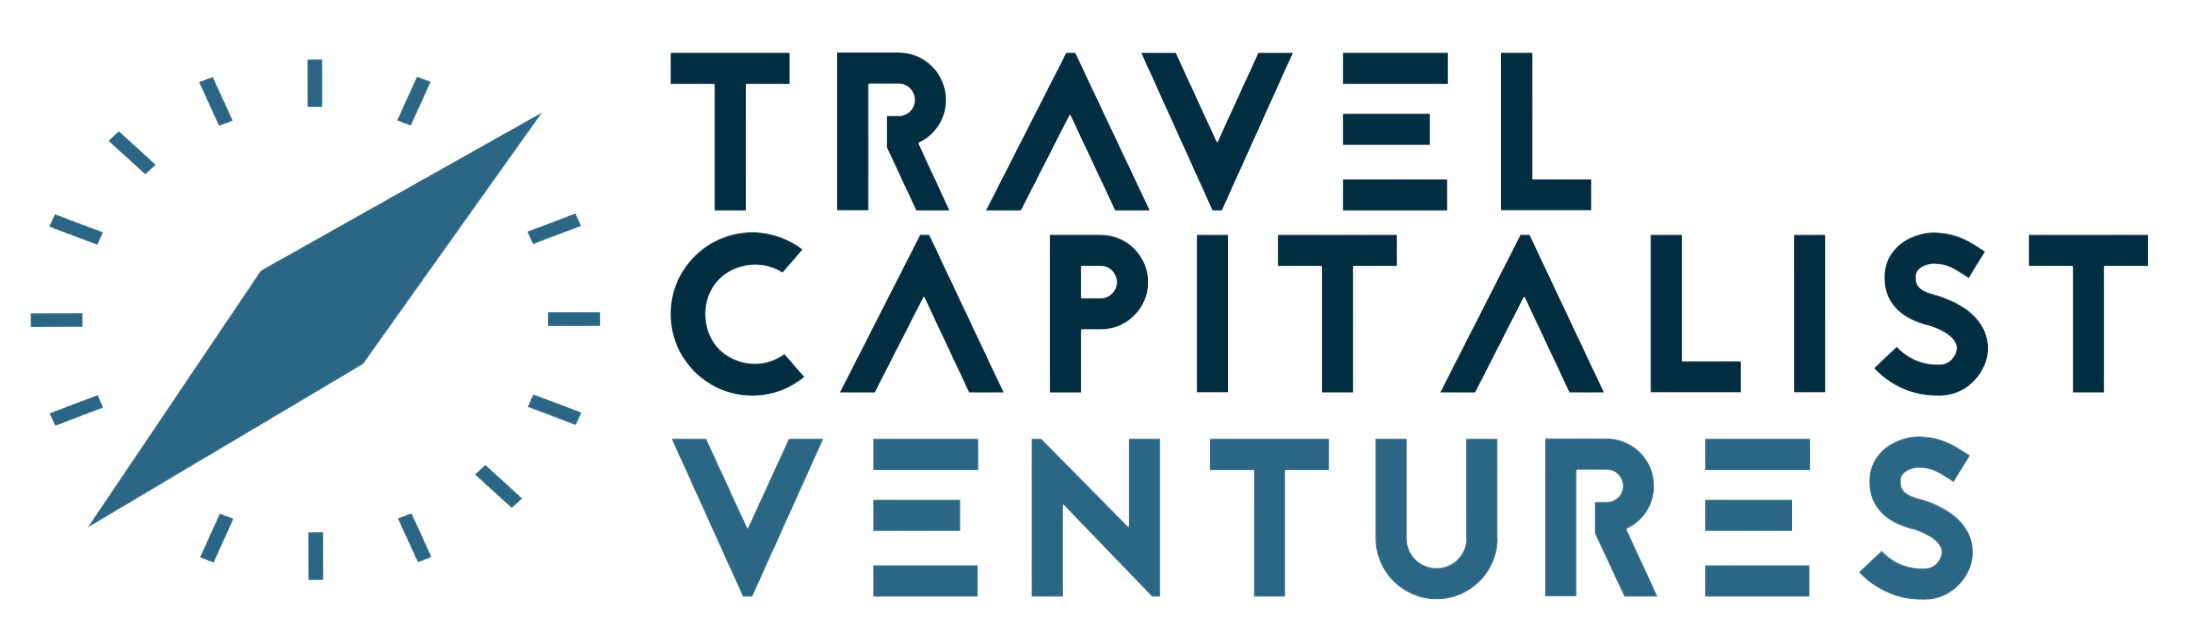 Travel Venture Capital & Private Equity Investors.